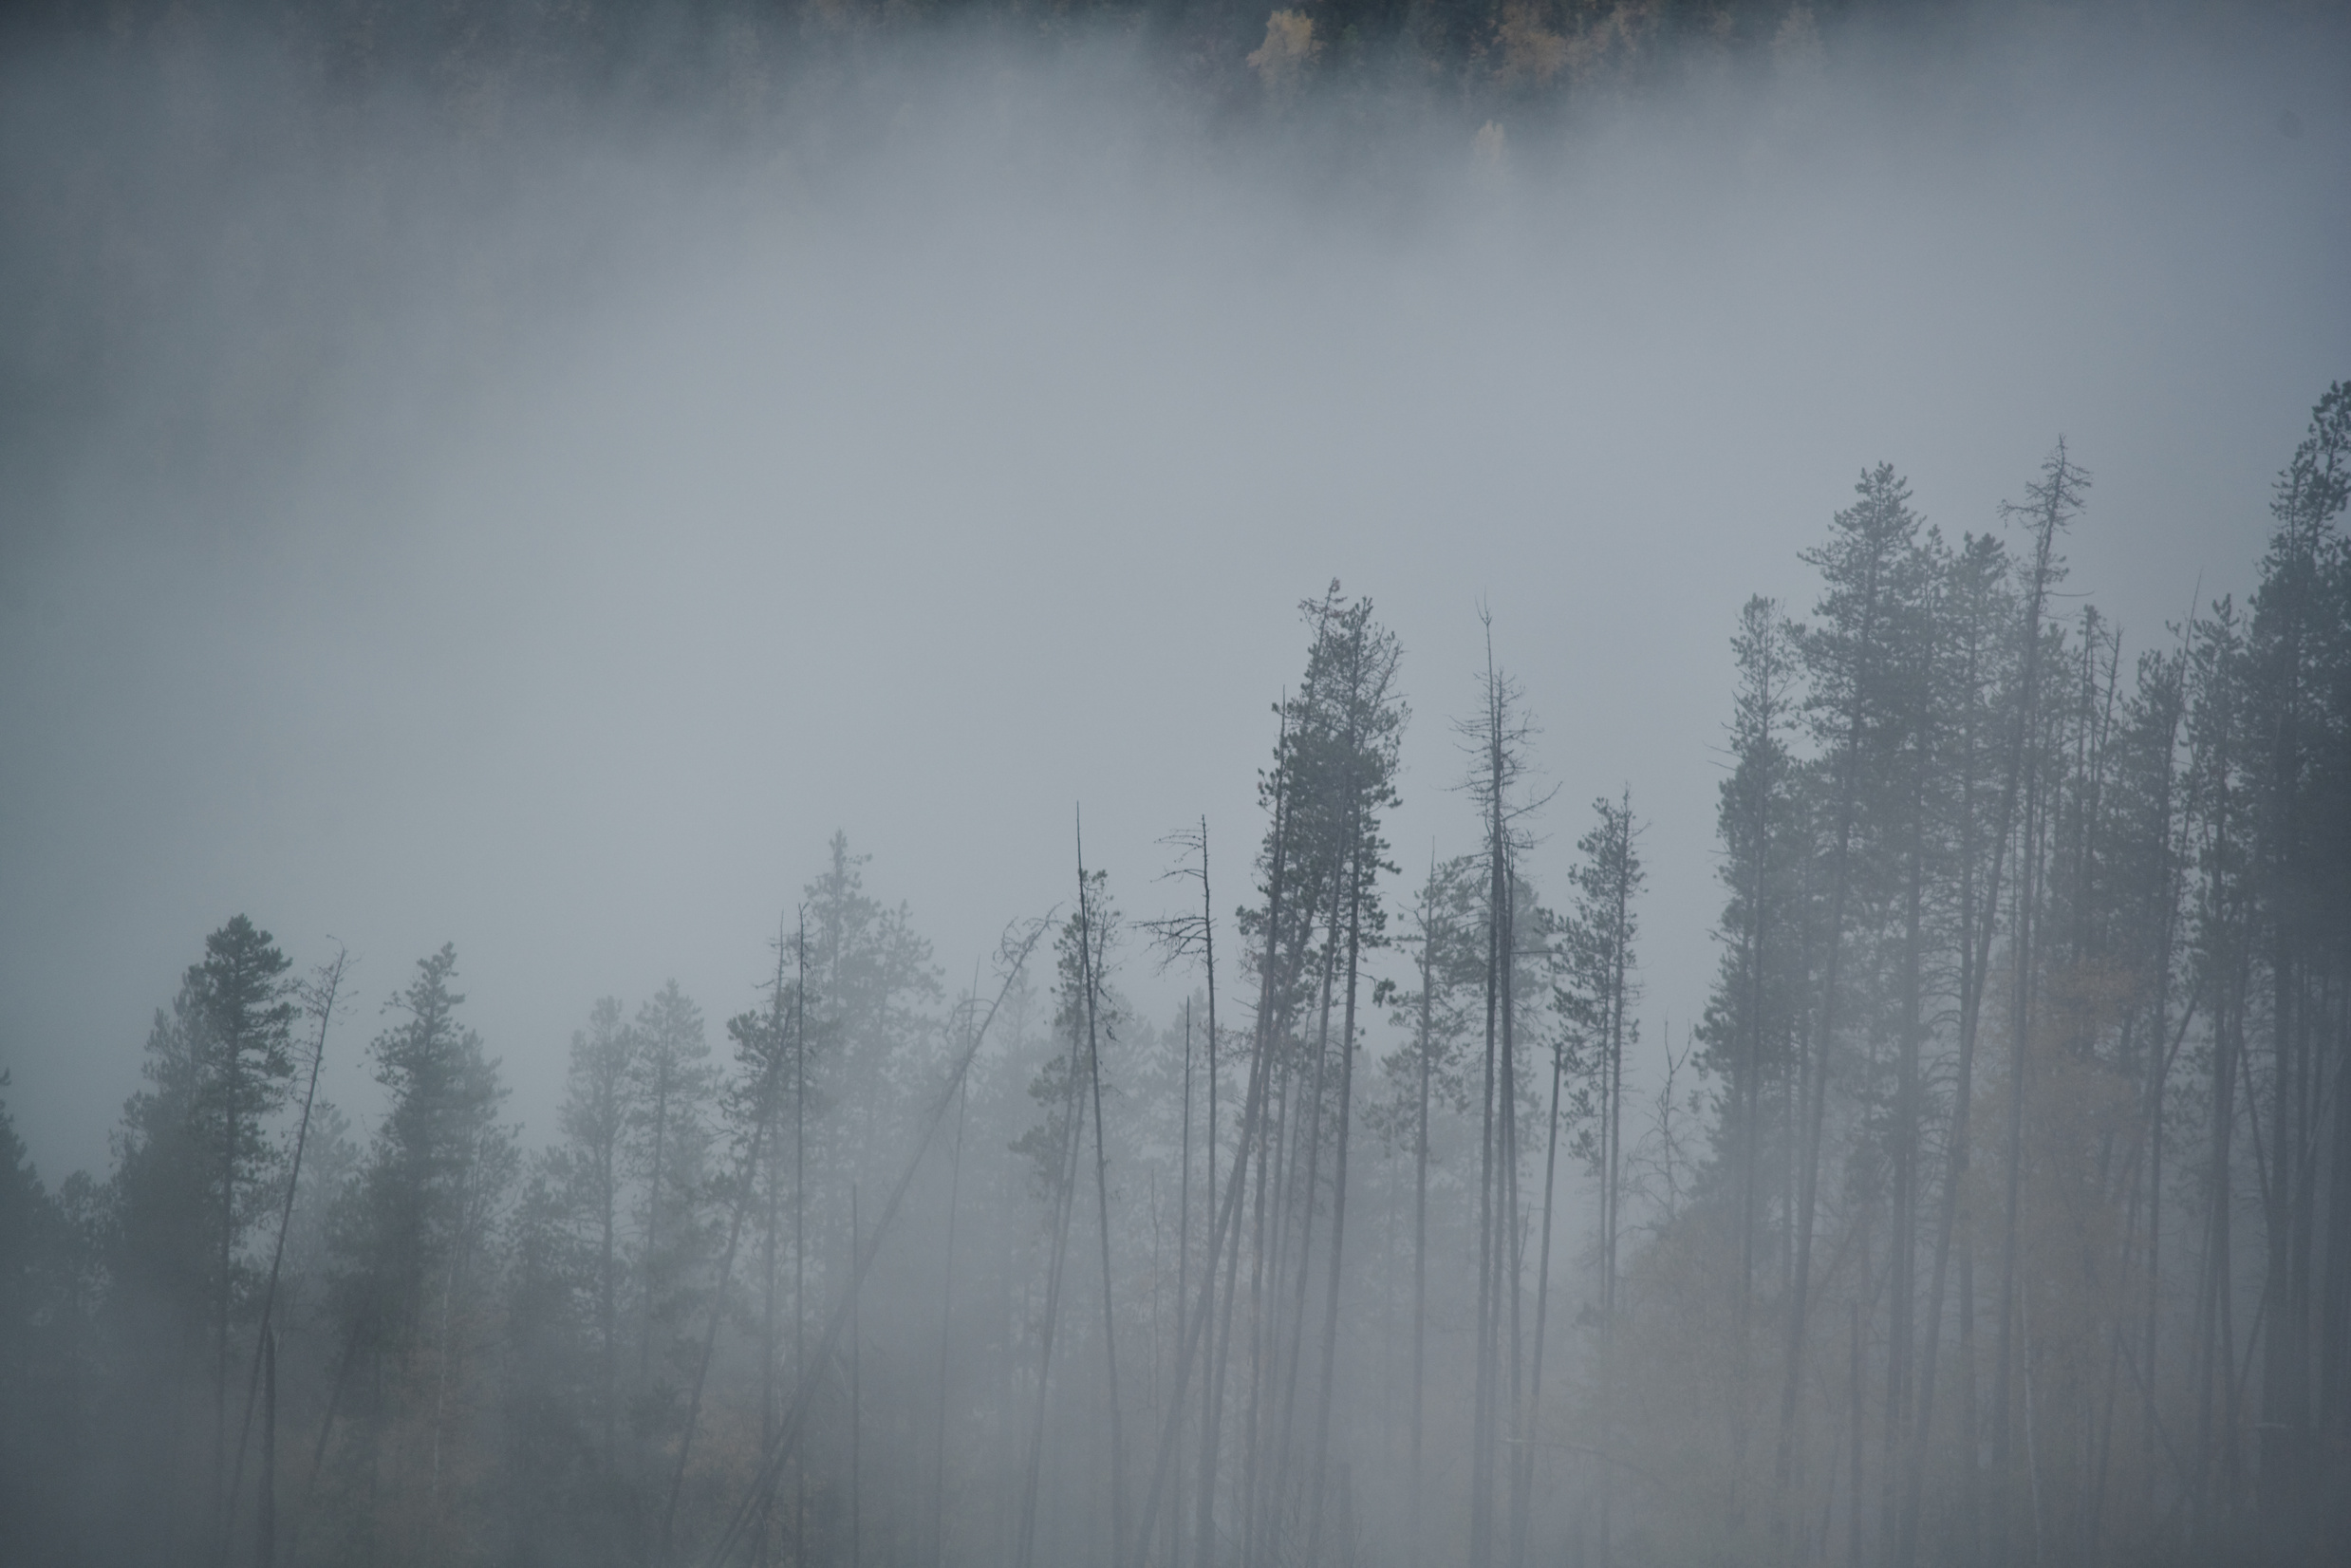 Mystery and wander lie underneath the fog